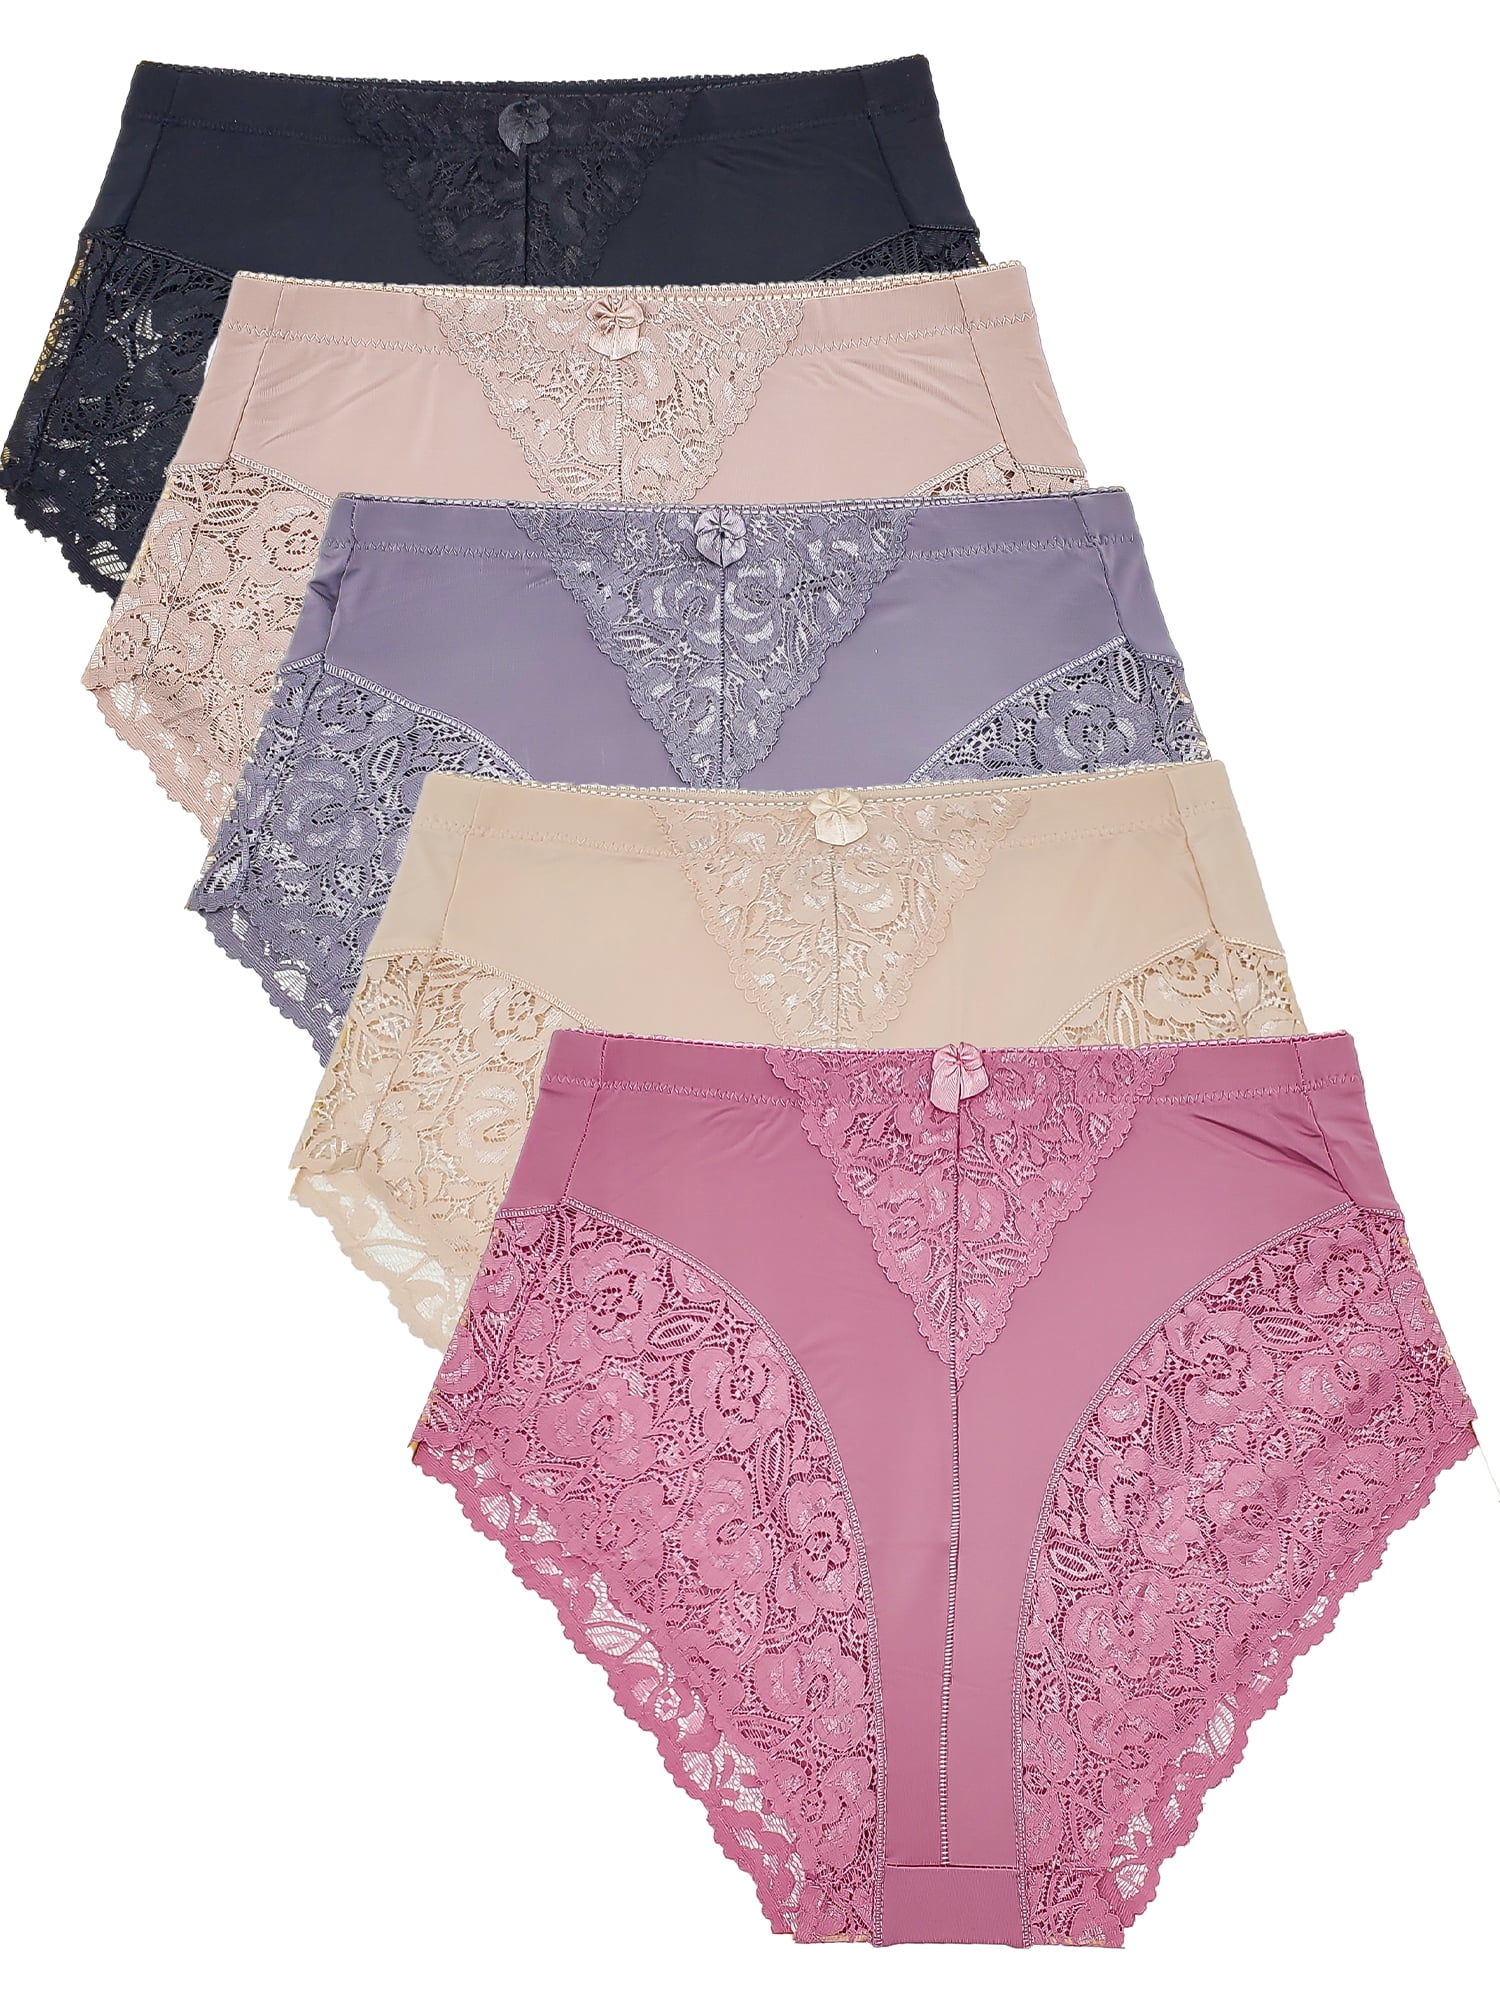 Warmword 5 Pack Ice Silk Cotton Seamless Underwear For Women Panties